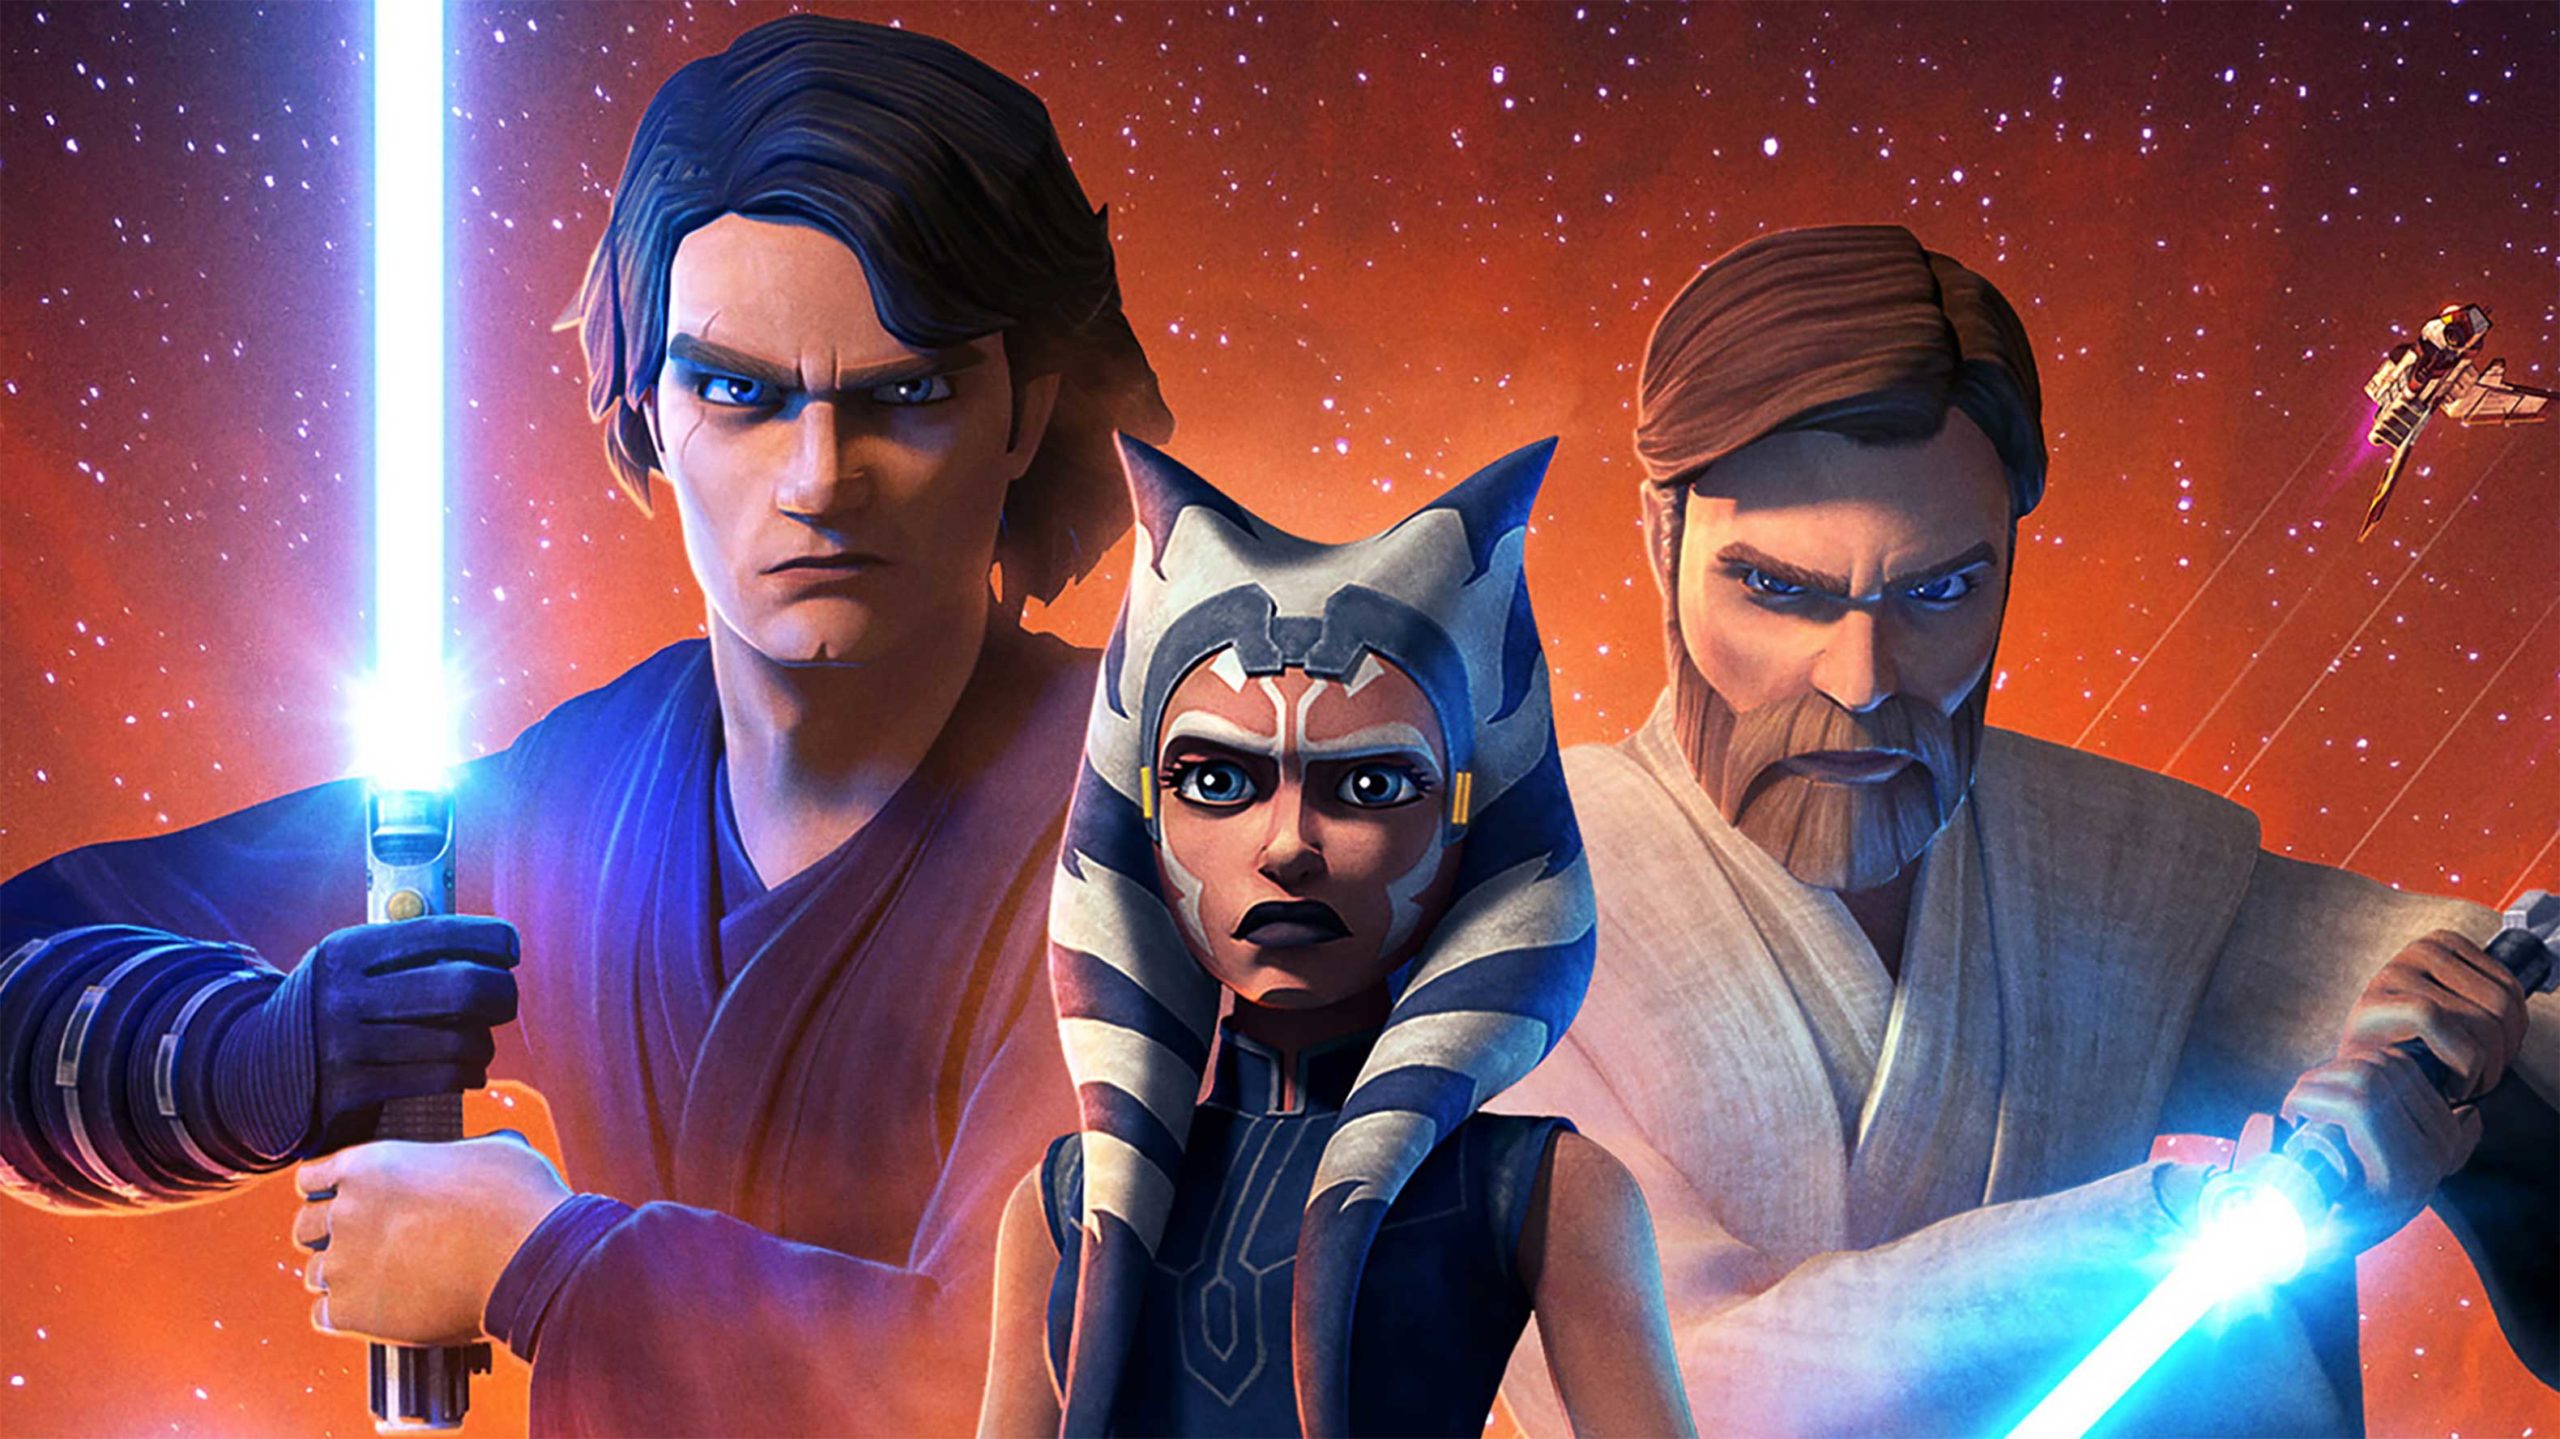 Star Wars: The Clone Wars final season